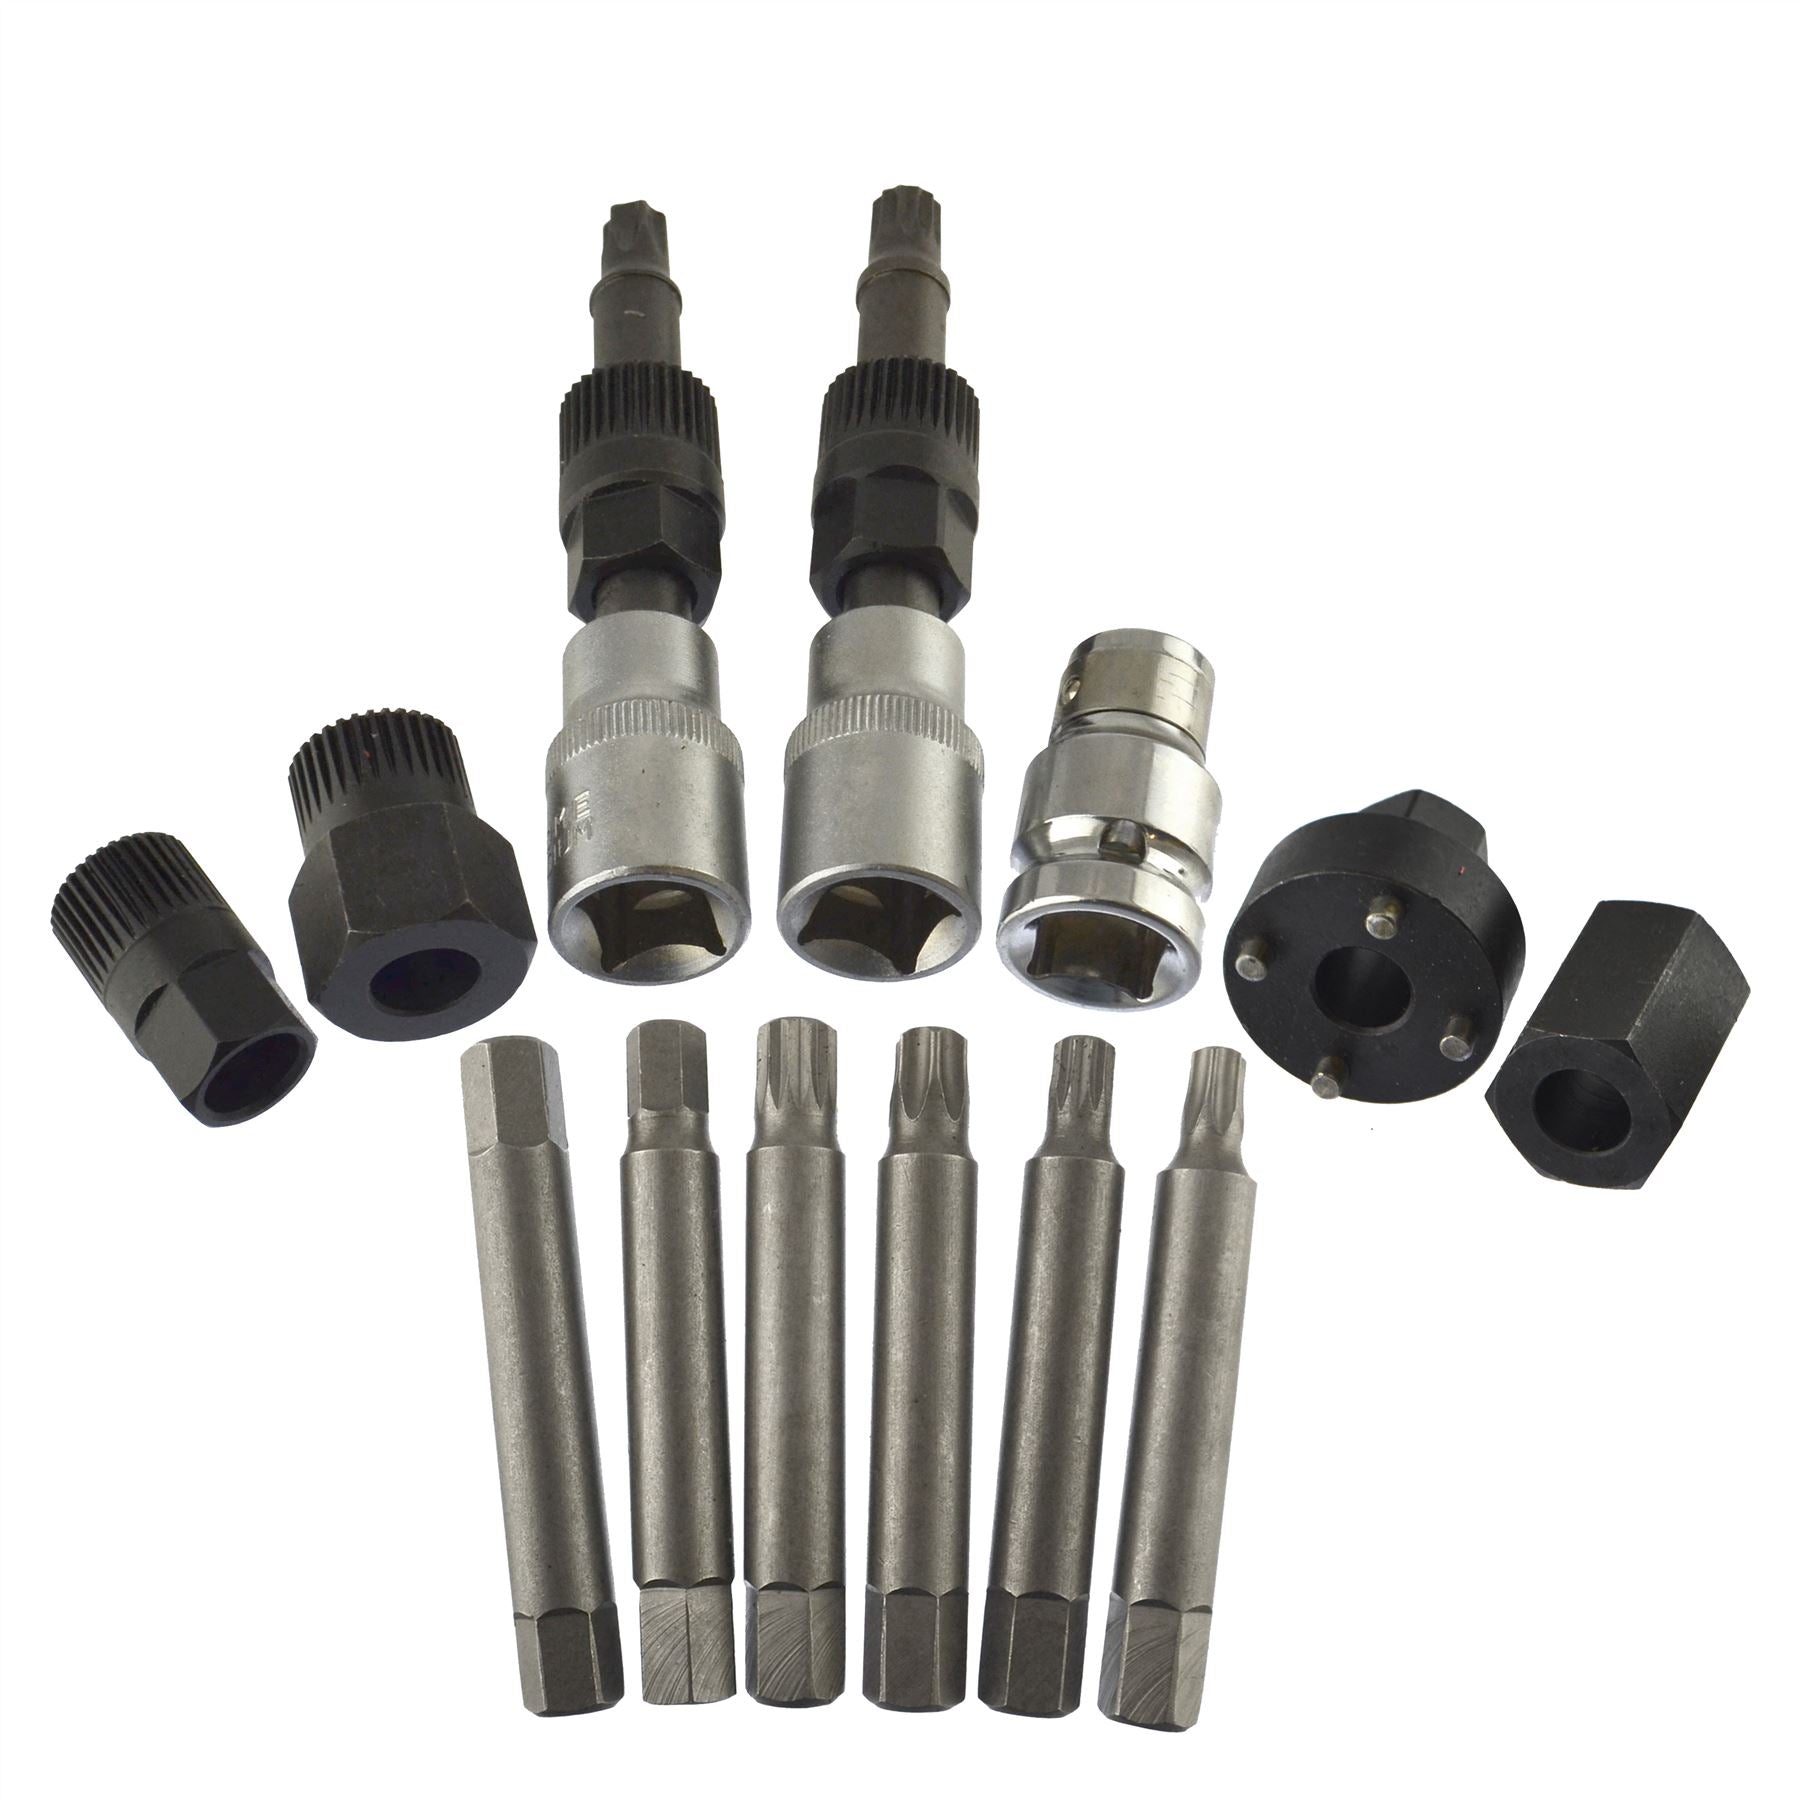 Alternator tool set / repair / removal / pulley / BOSCH 13pc kit AT169